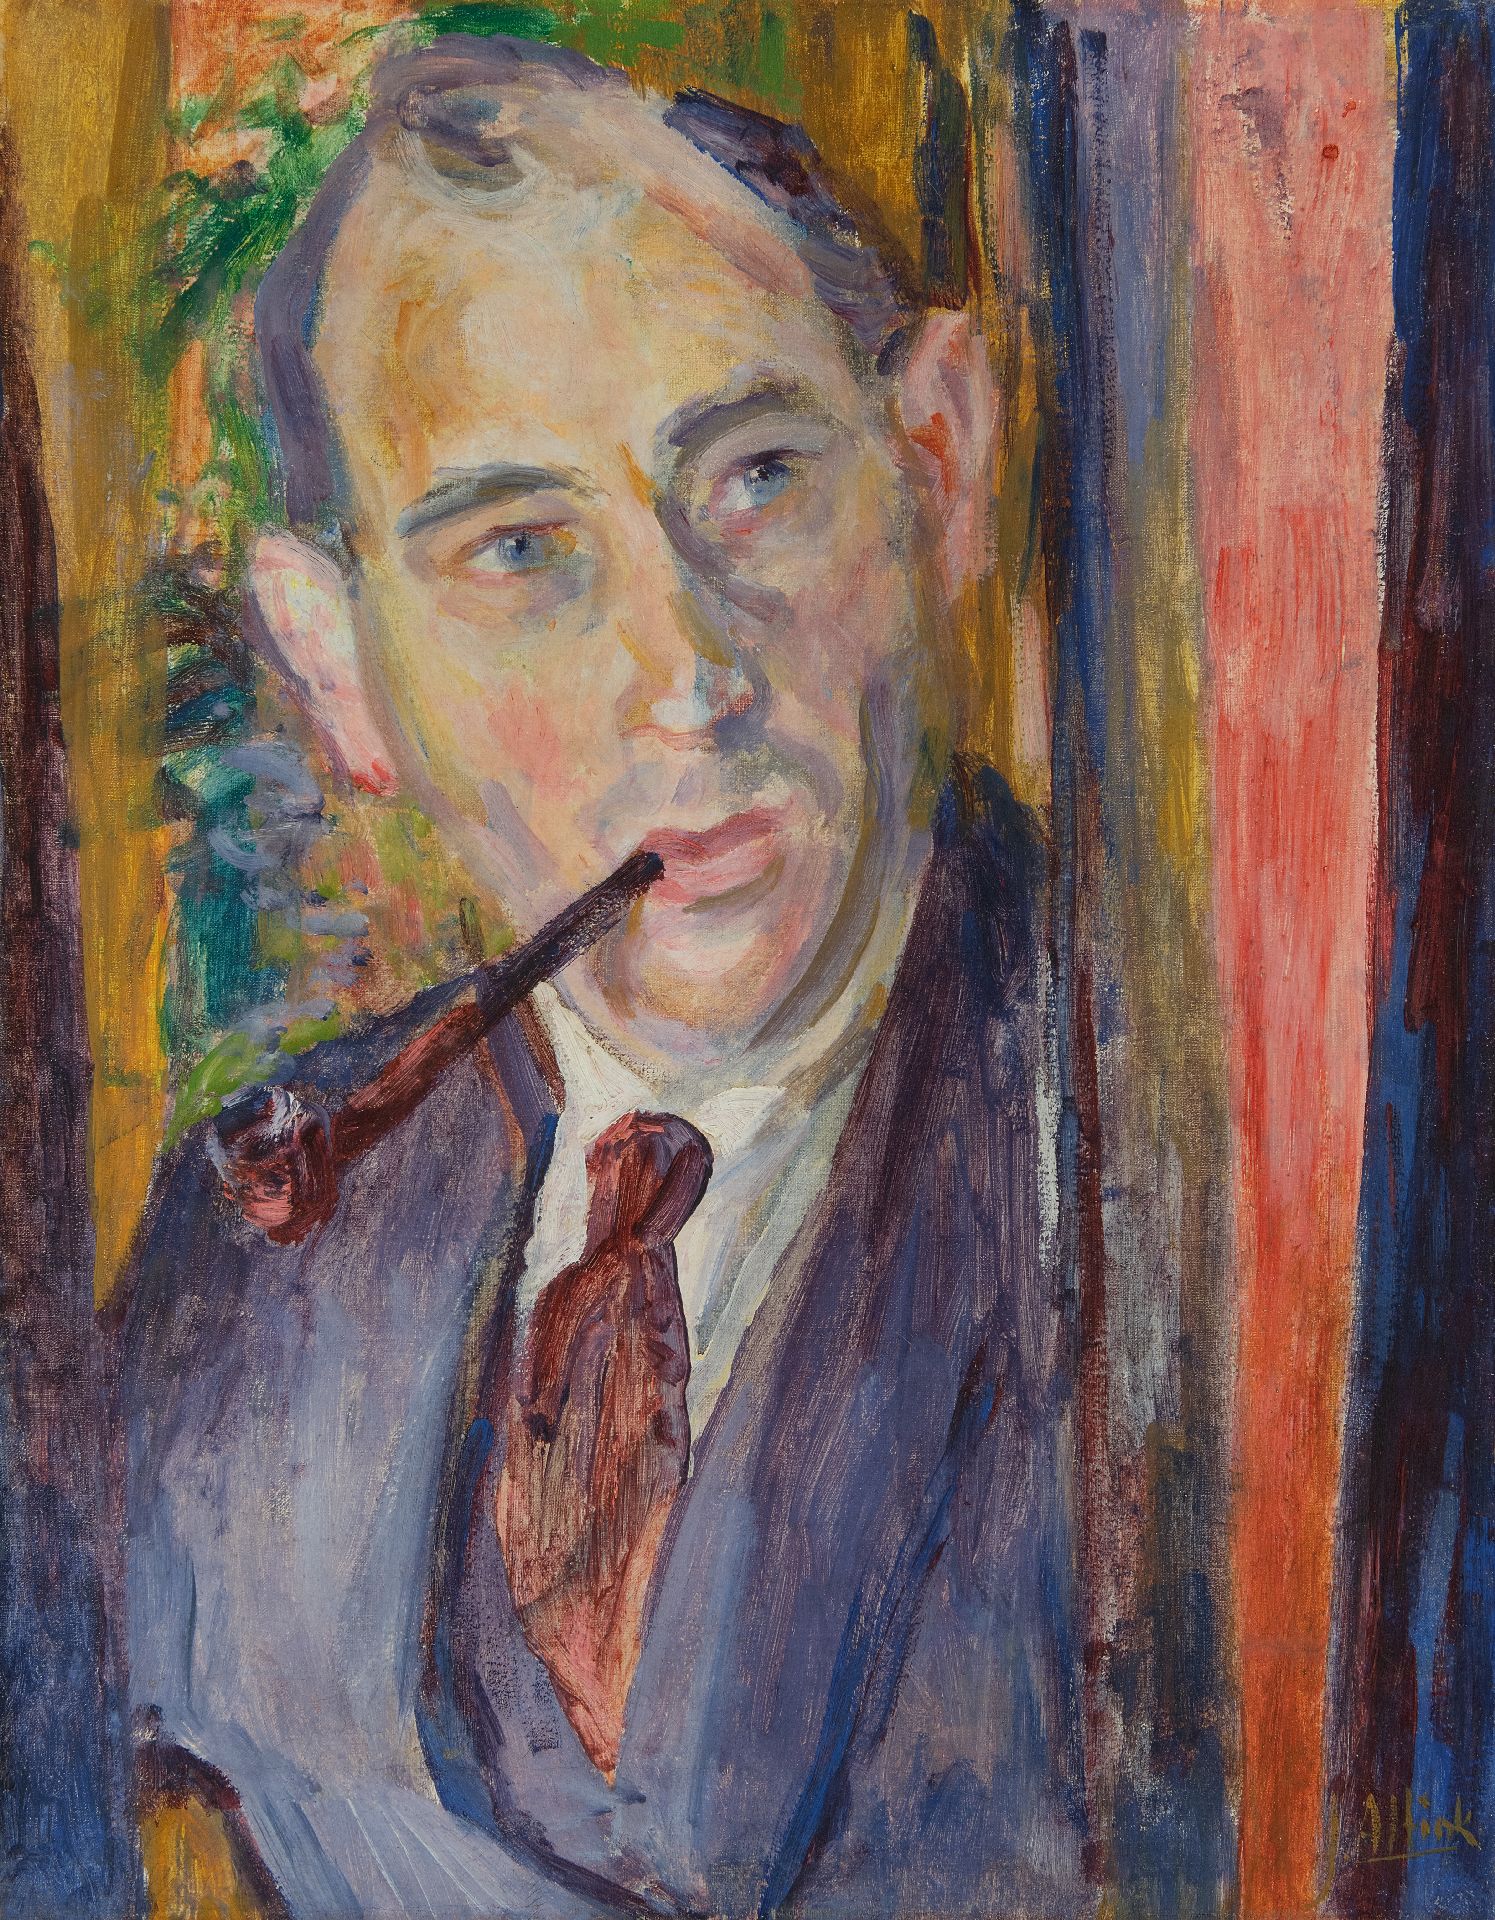 Portrait of artist, painter, watercolourist, draughtsman and printmaker Jan Altink